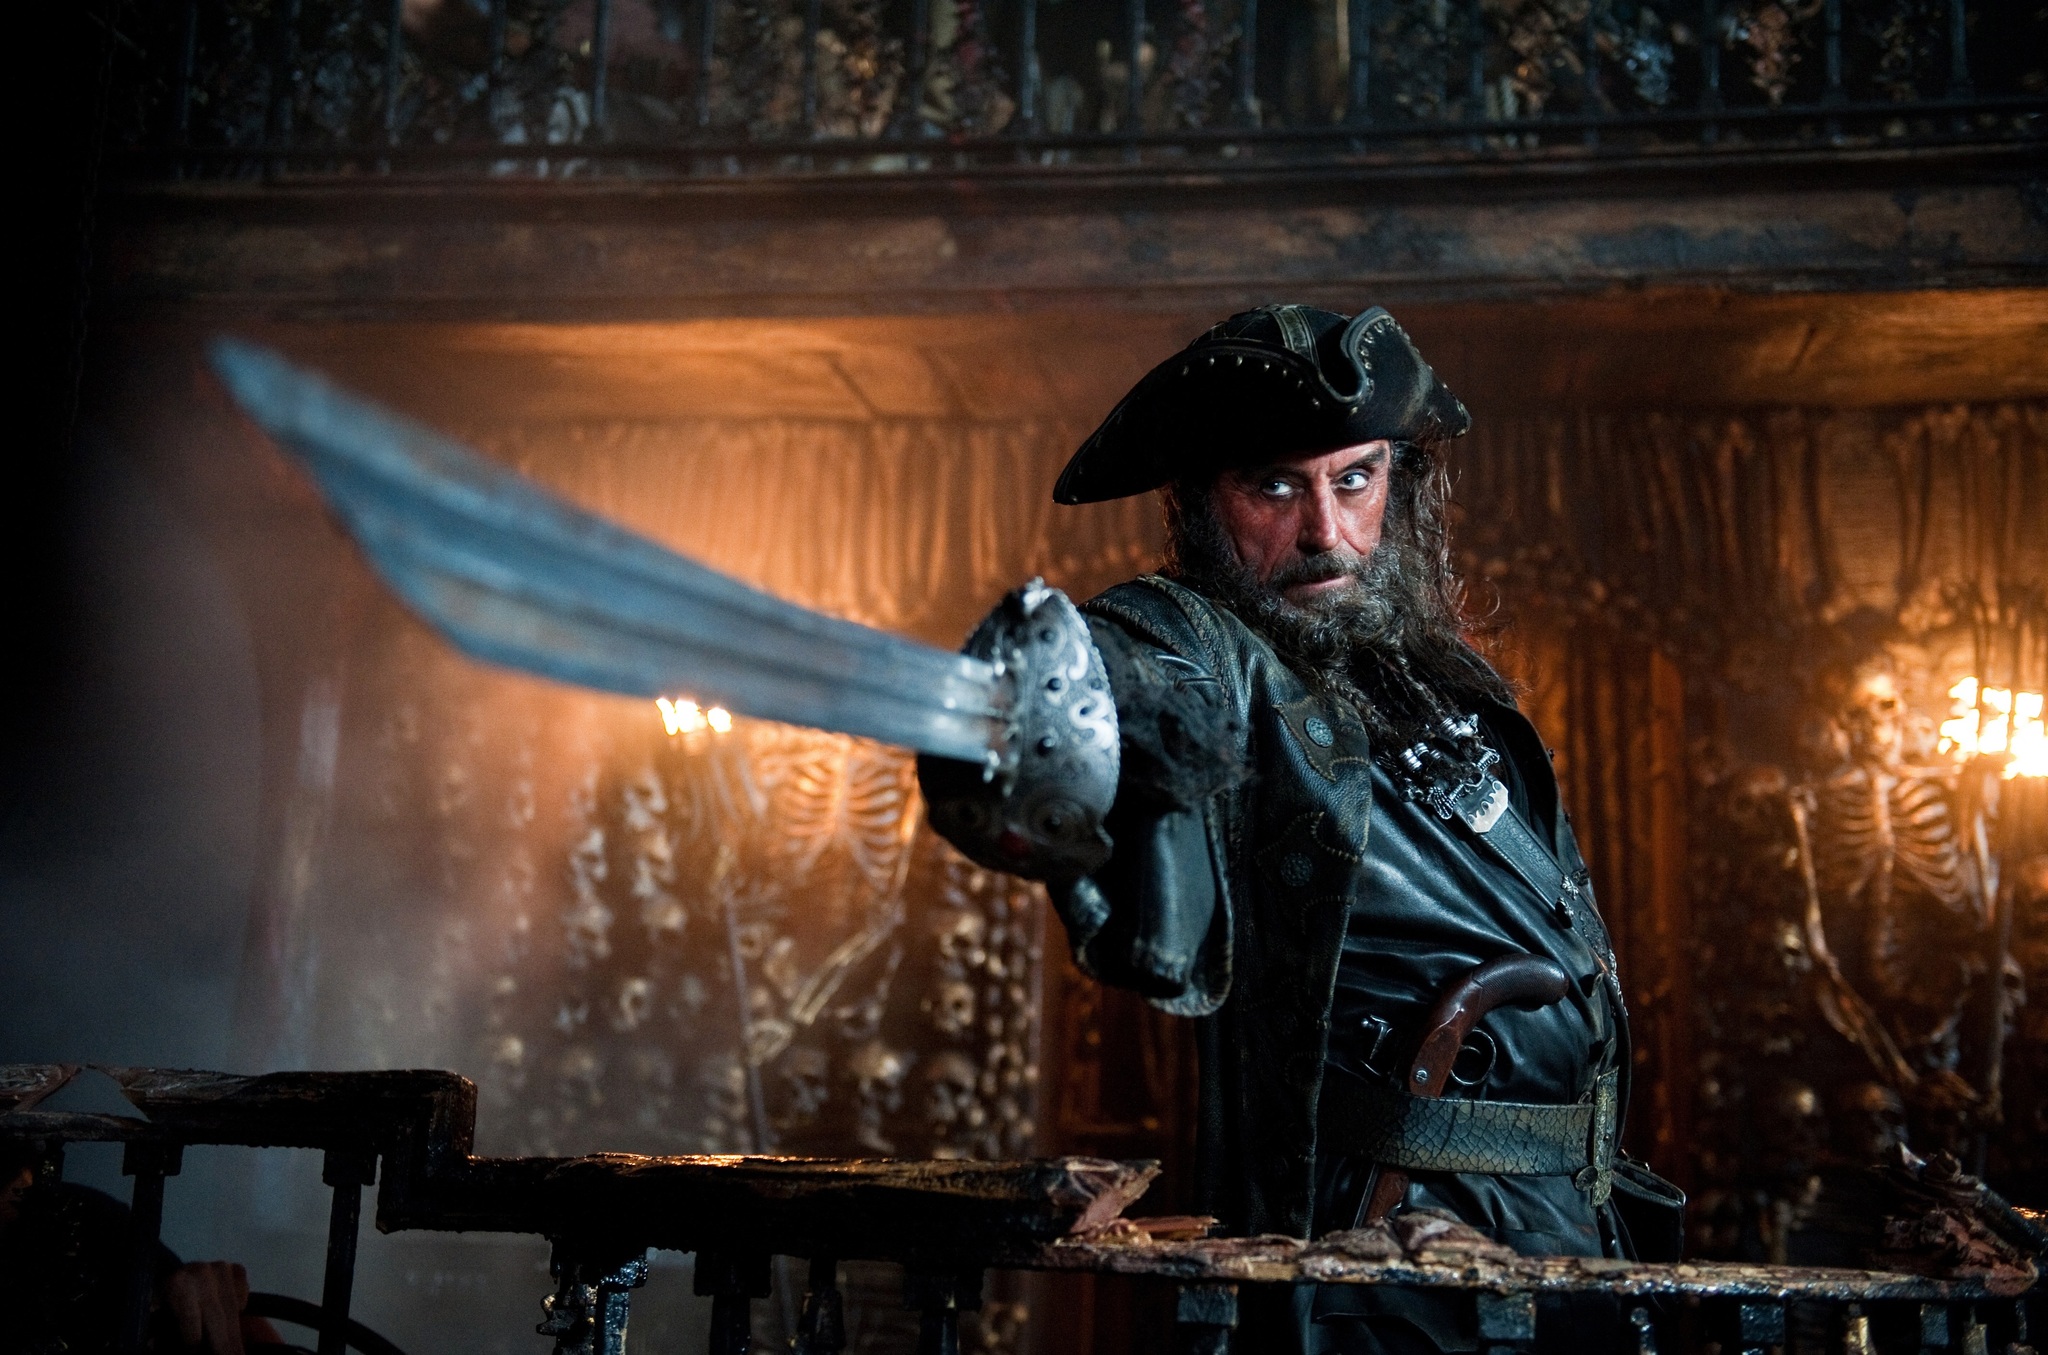 Blackbeard the pirate